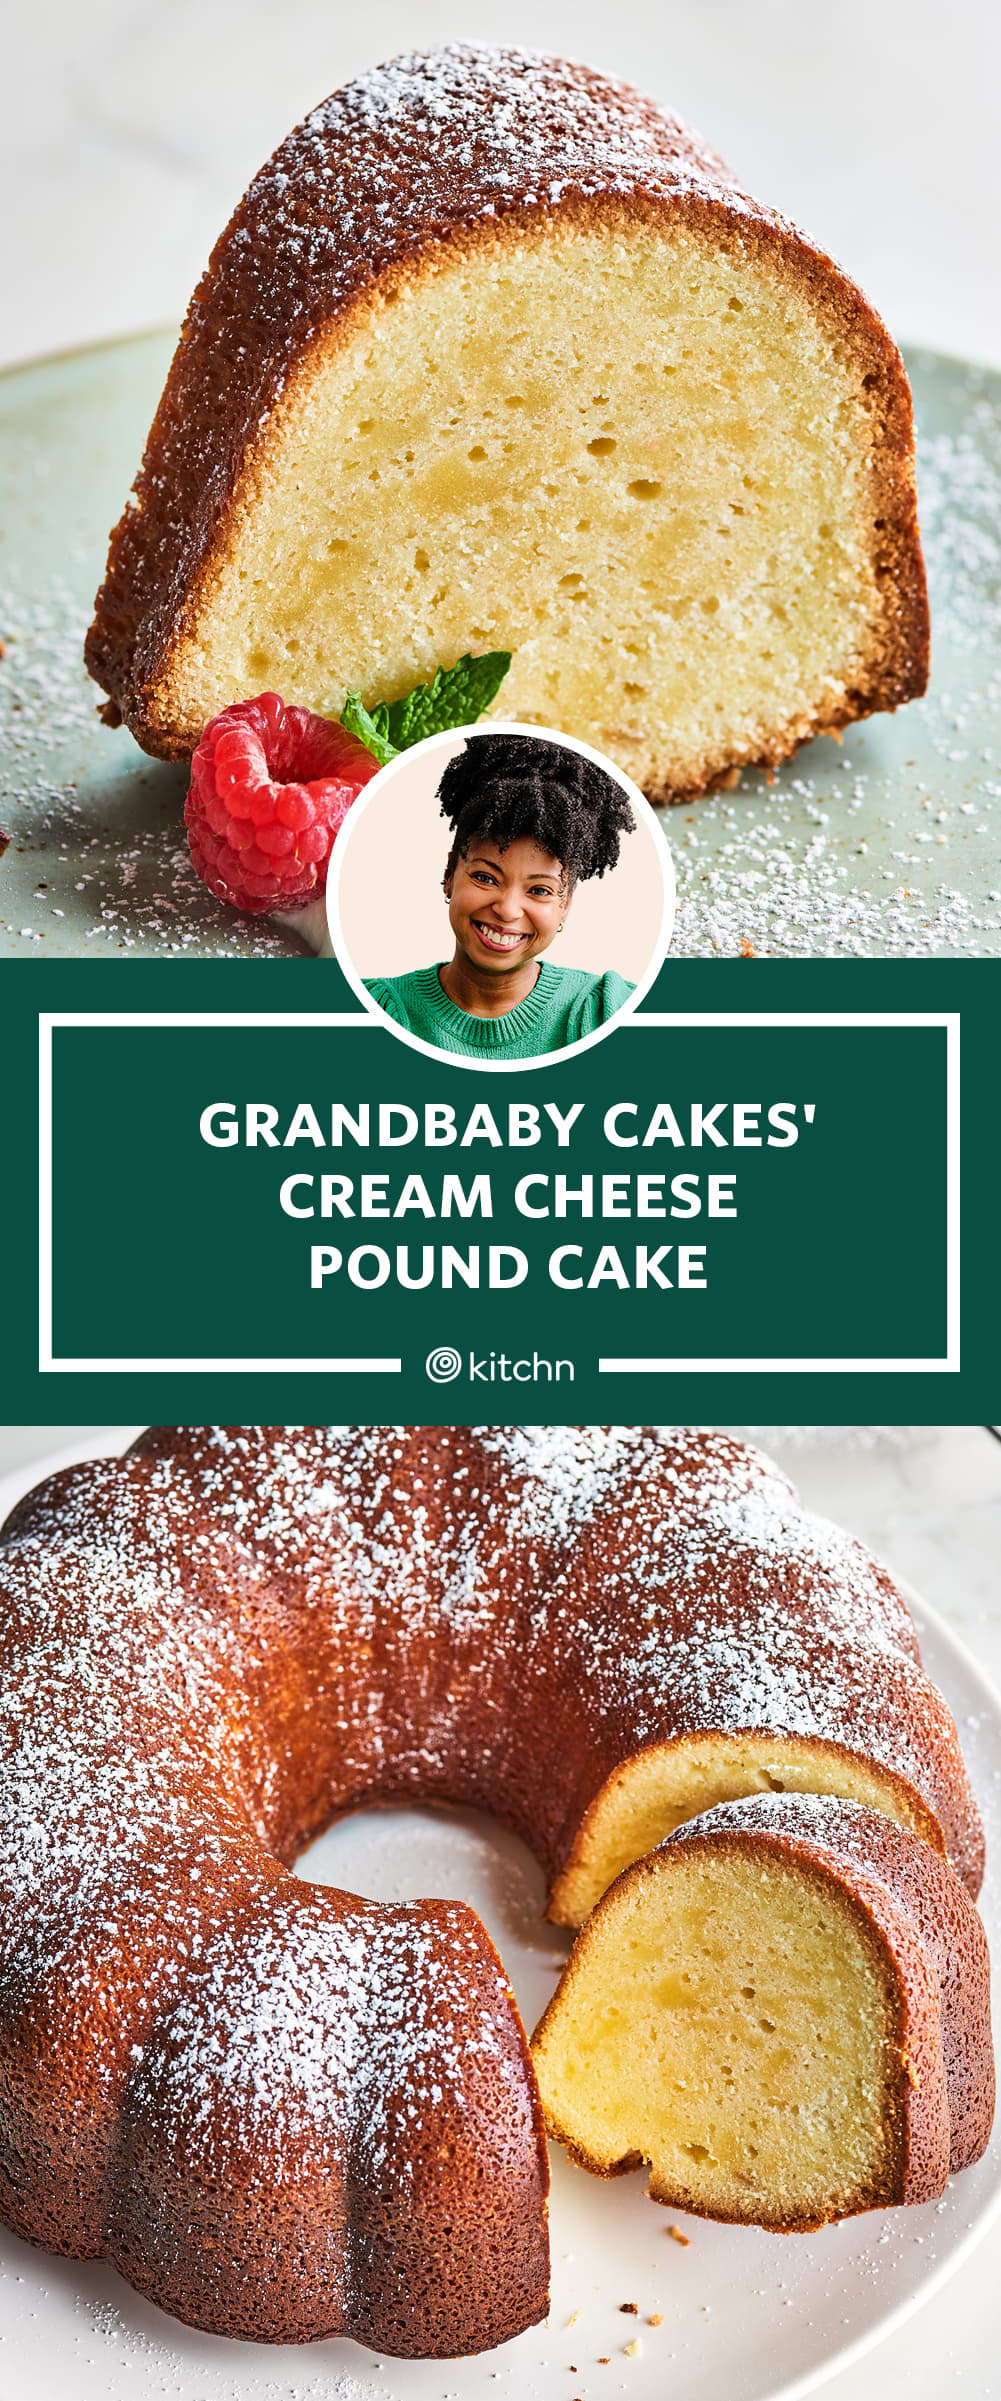 Easy No-Bake Banana Cream Cheesecake Recipe | The Recipe Critic